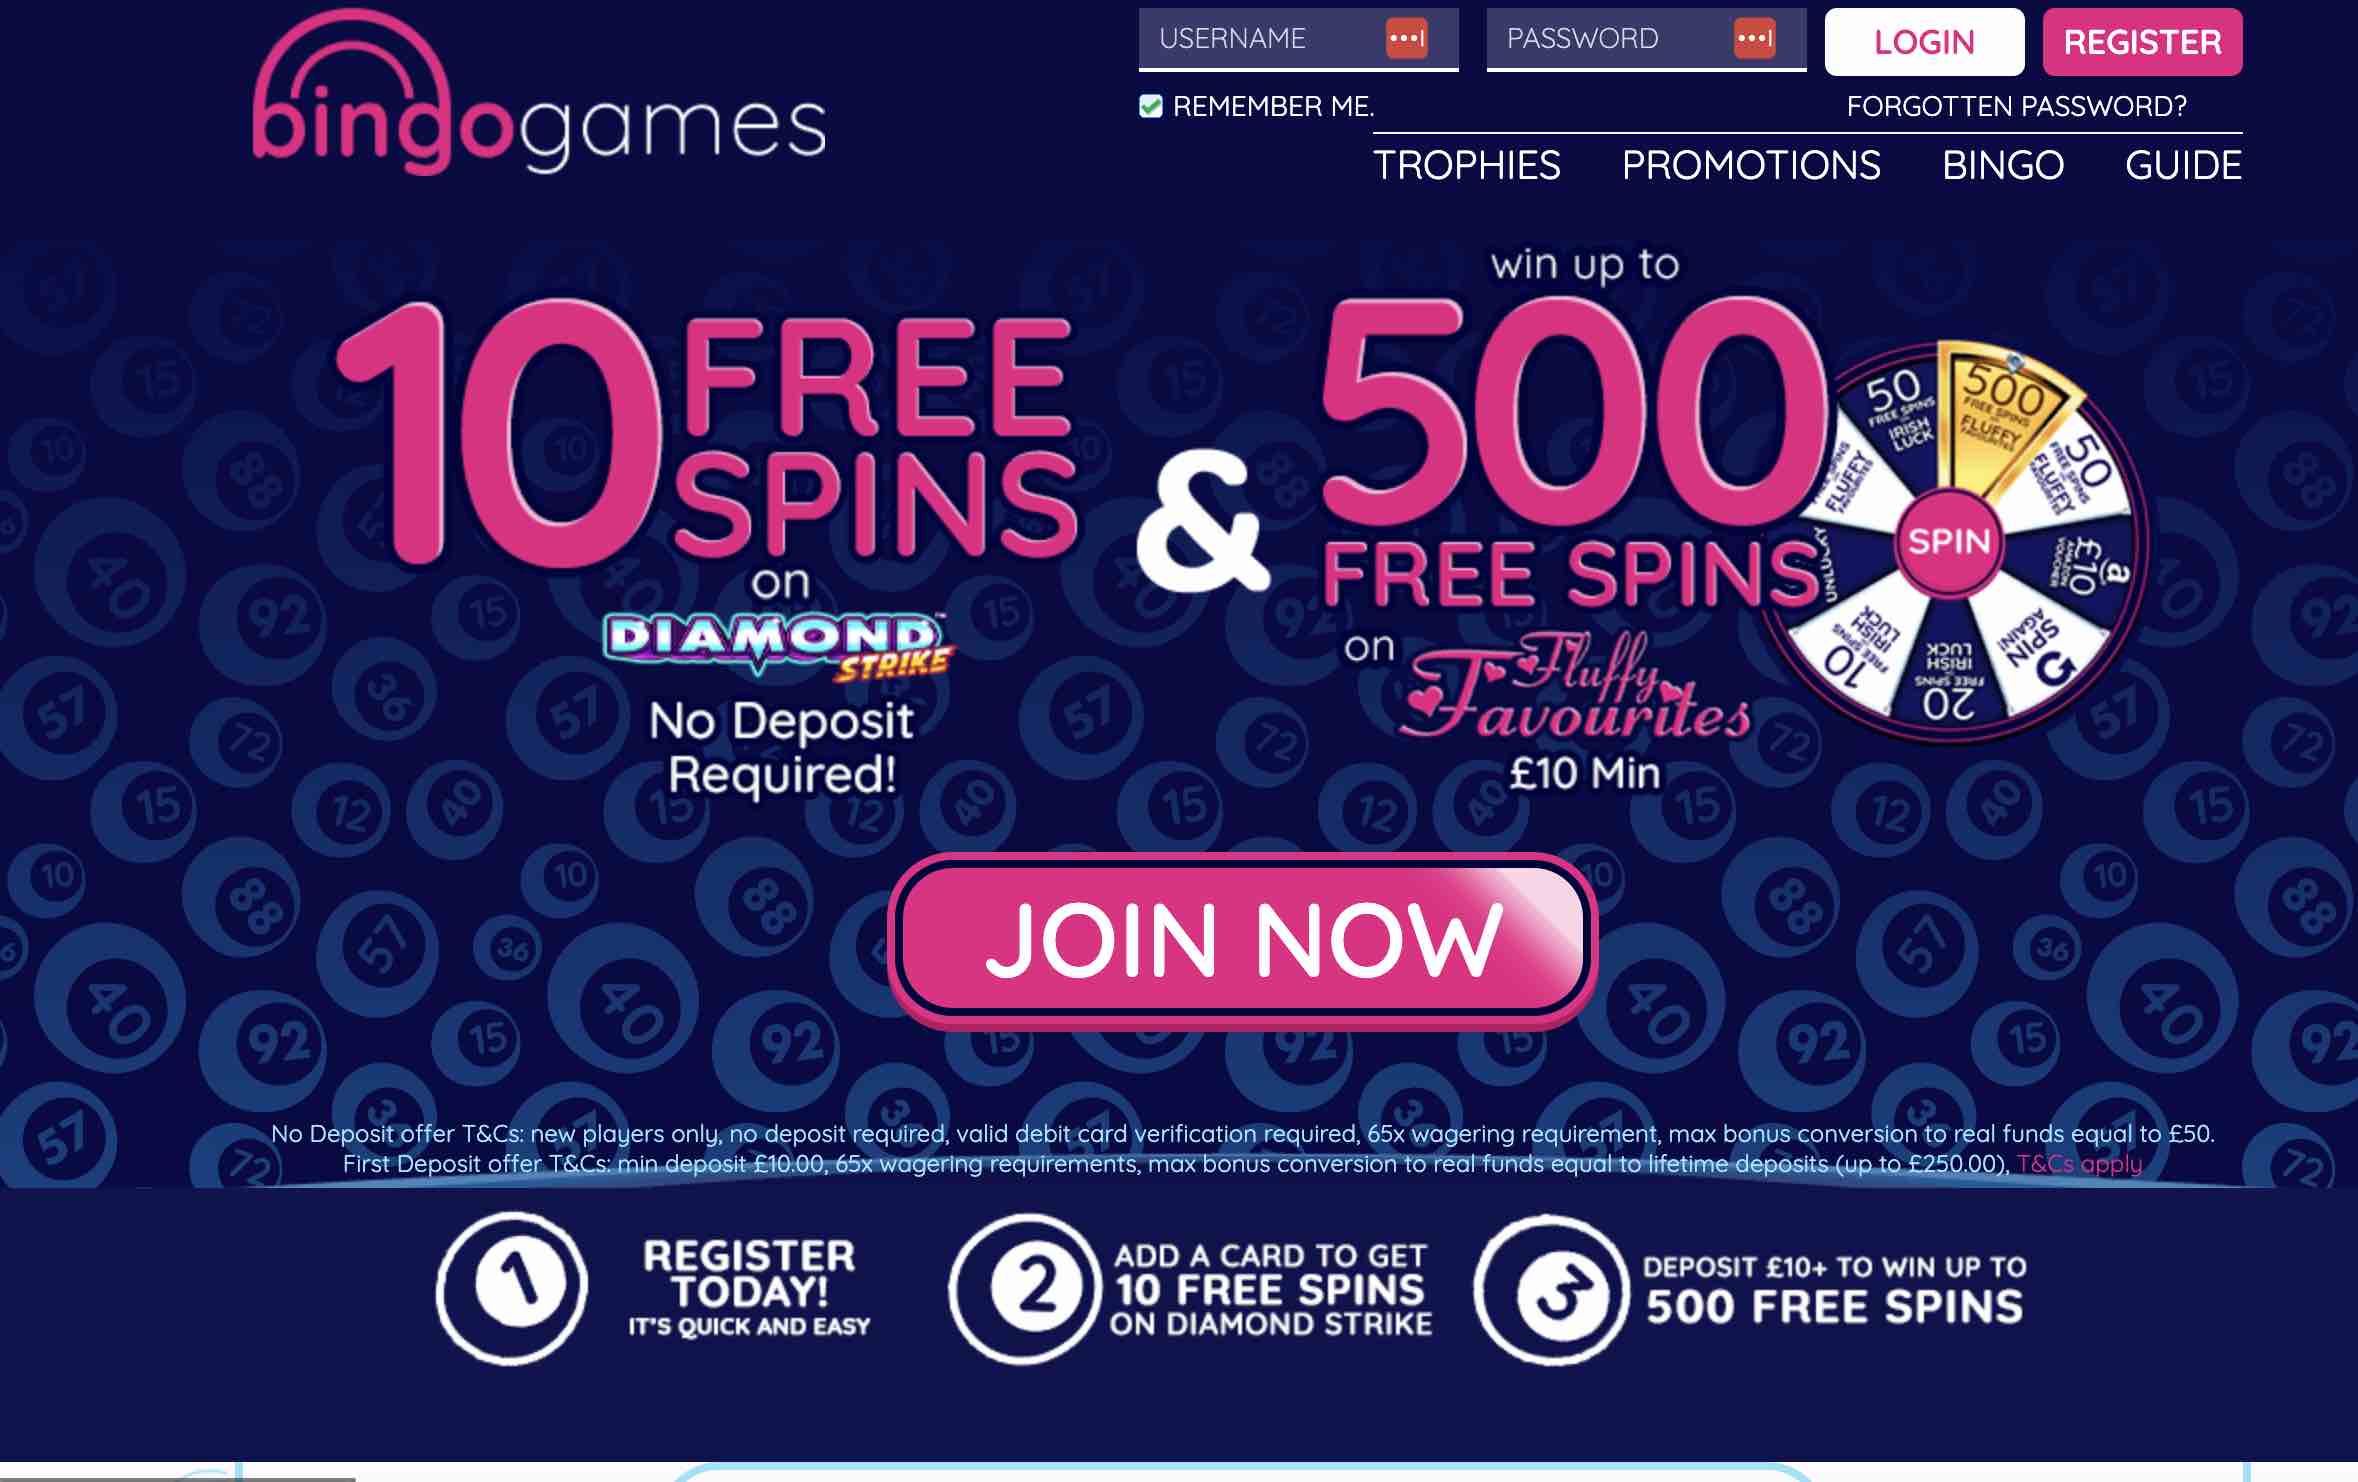 free bingo slots no deposit